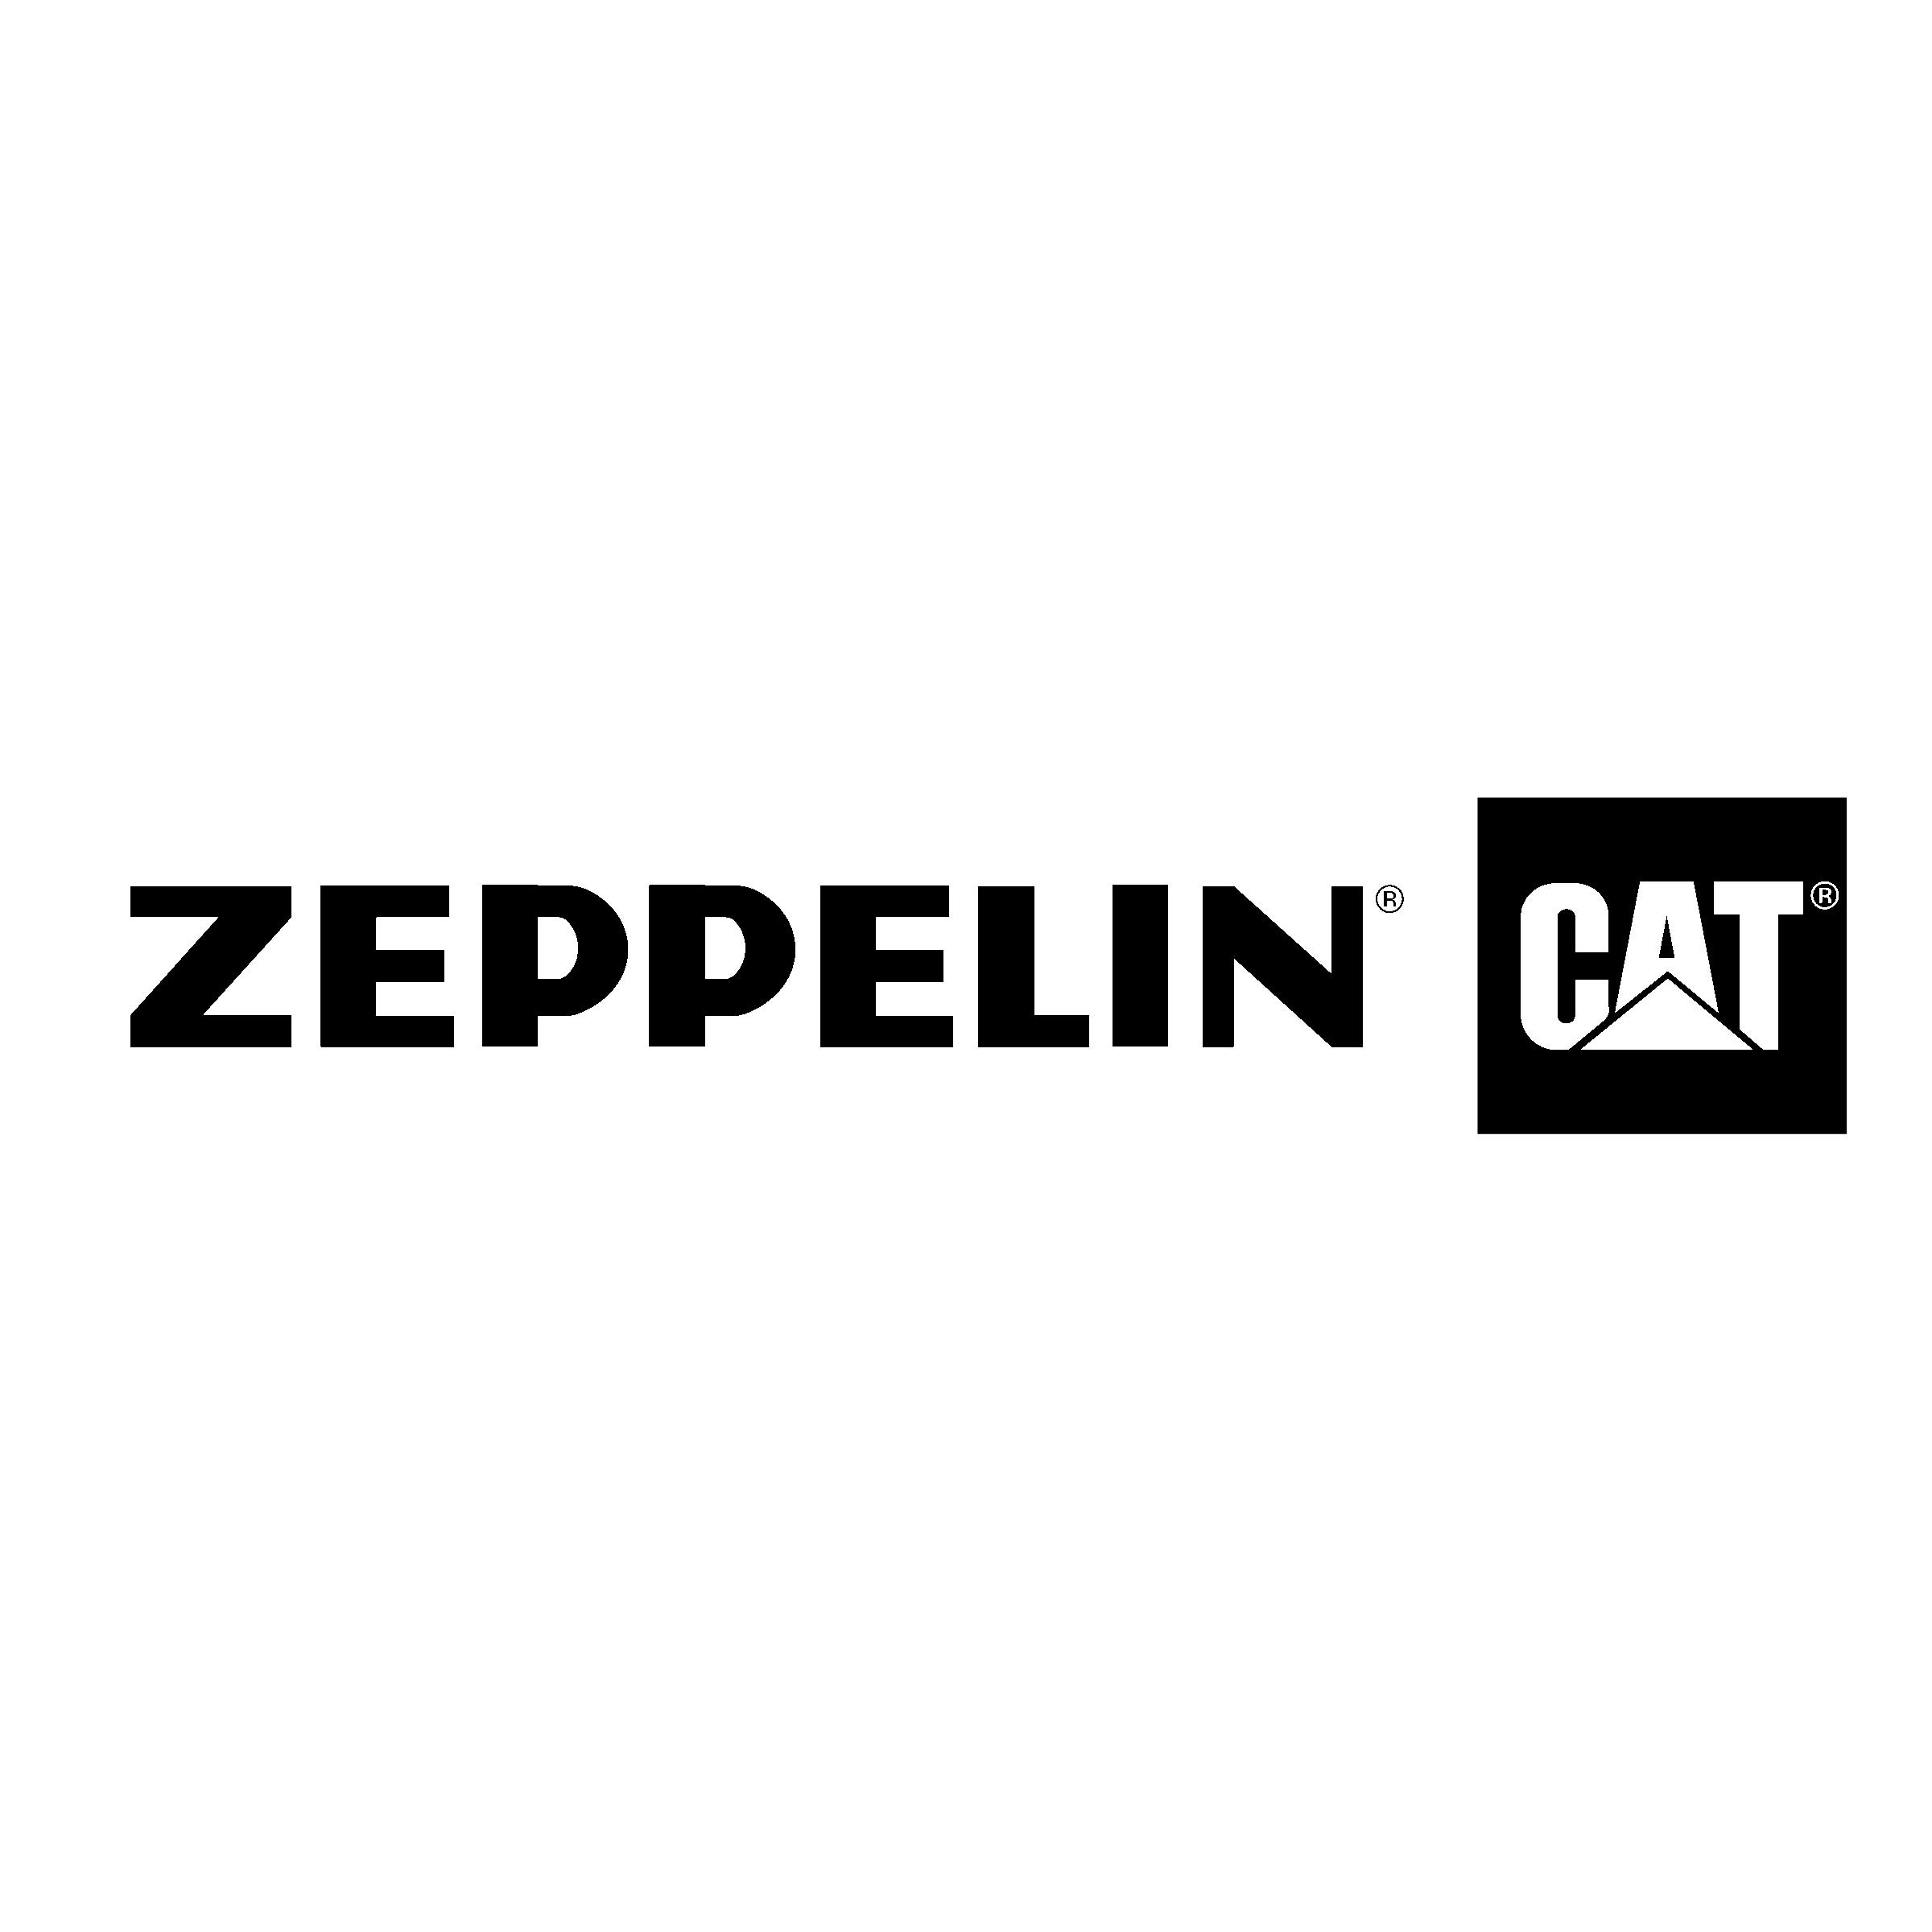 Black and White Caterpillar Logo - Zeppelin Caterpillar Logo PNG Transparent & SVG Vector